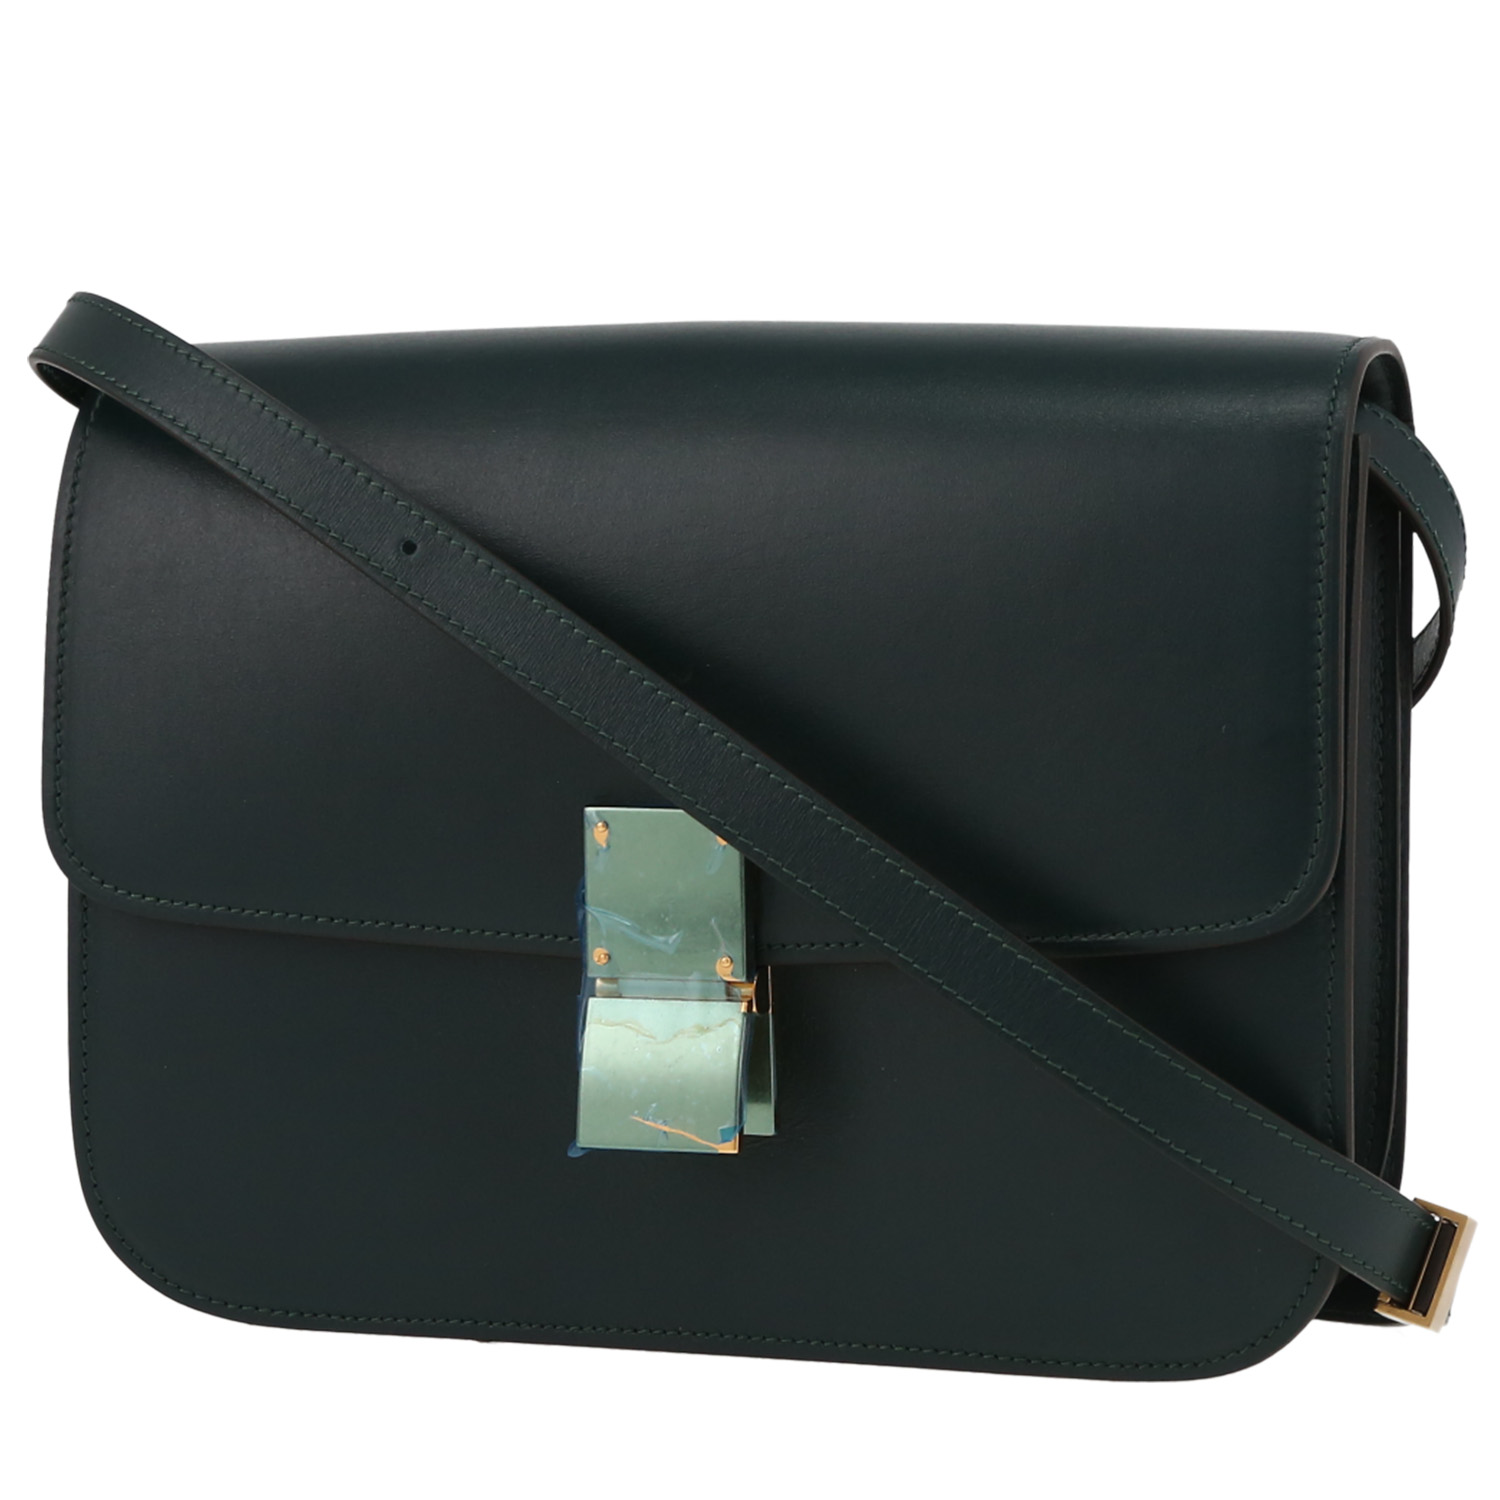  Classic Box Medium Model Shoulder Bag In Green Box Leather